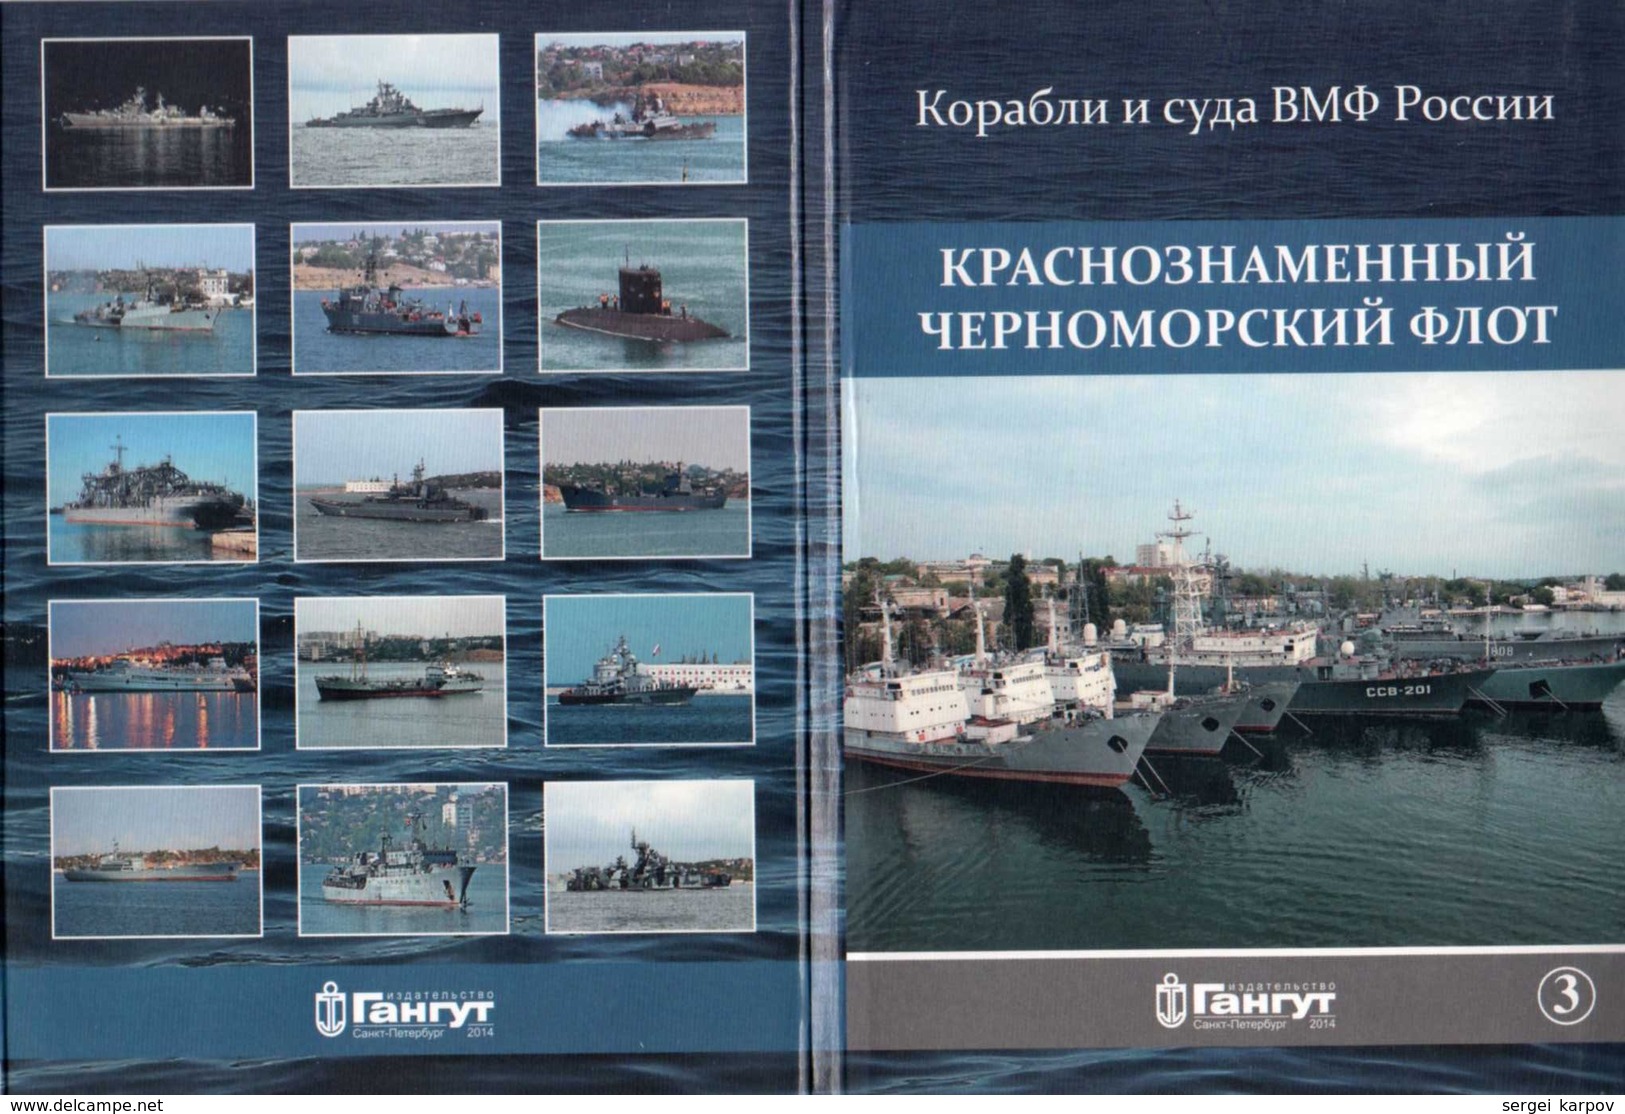 Russian Navy, part III (Russian Black sea Navy Fleet), 2014.